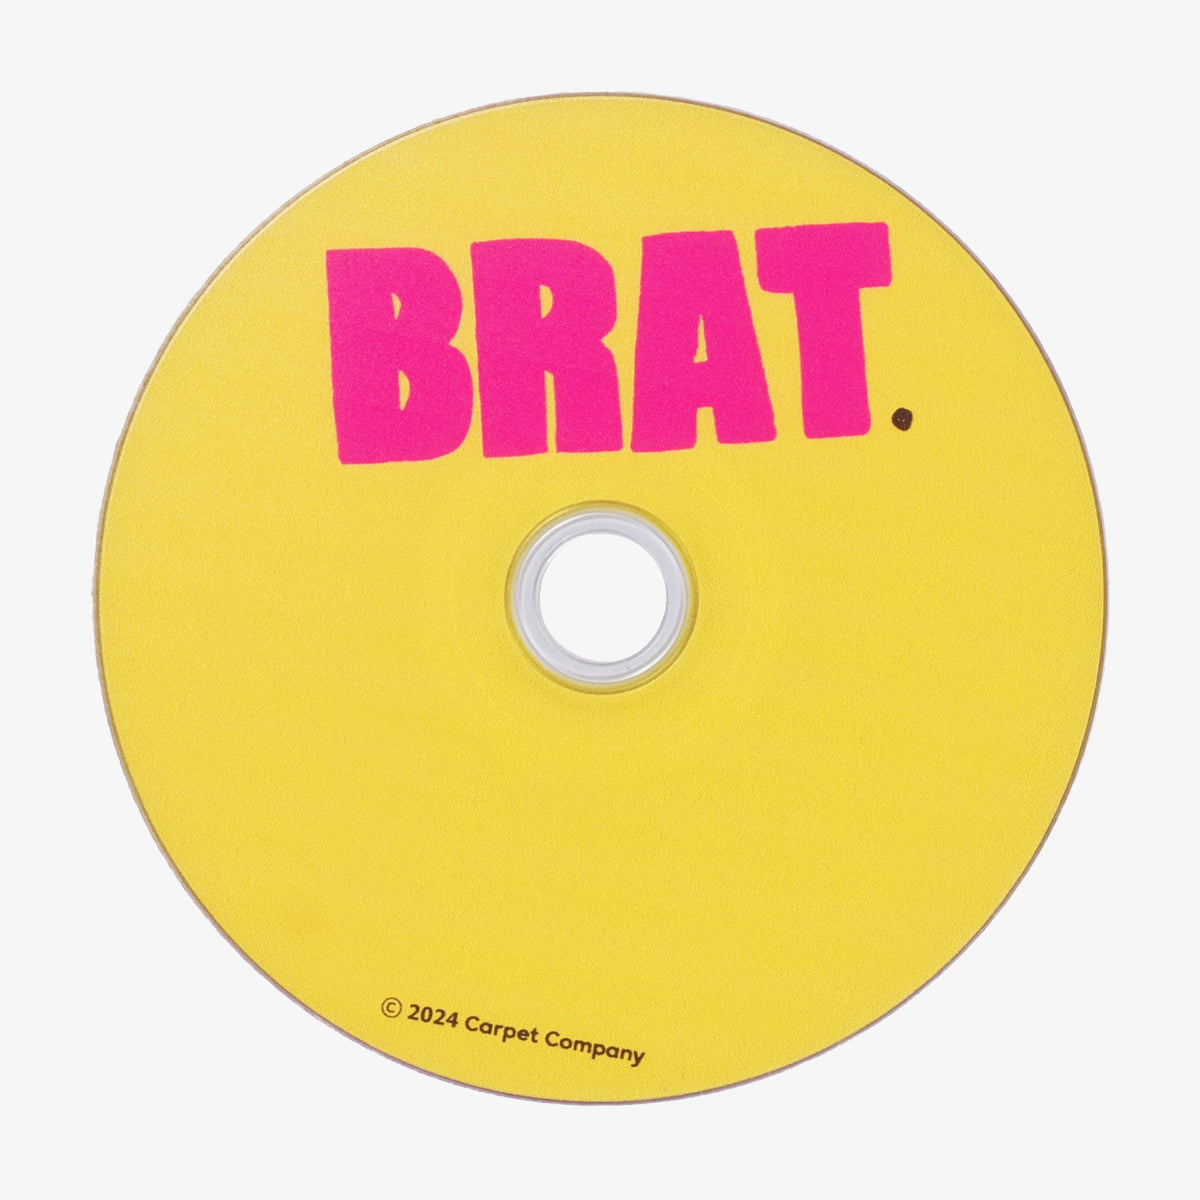 BRAT DVD